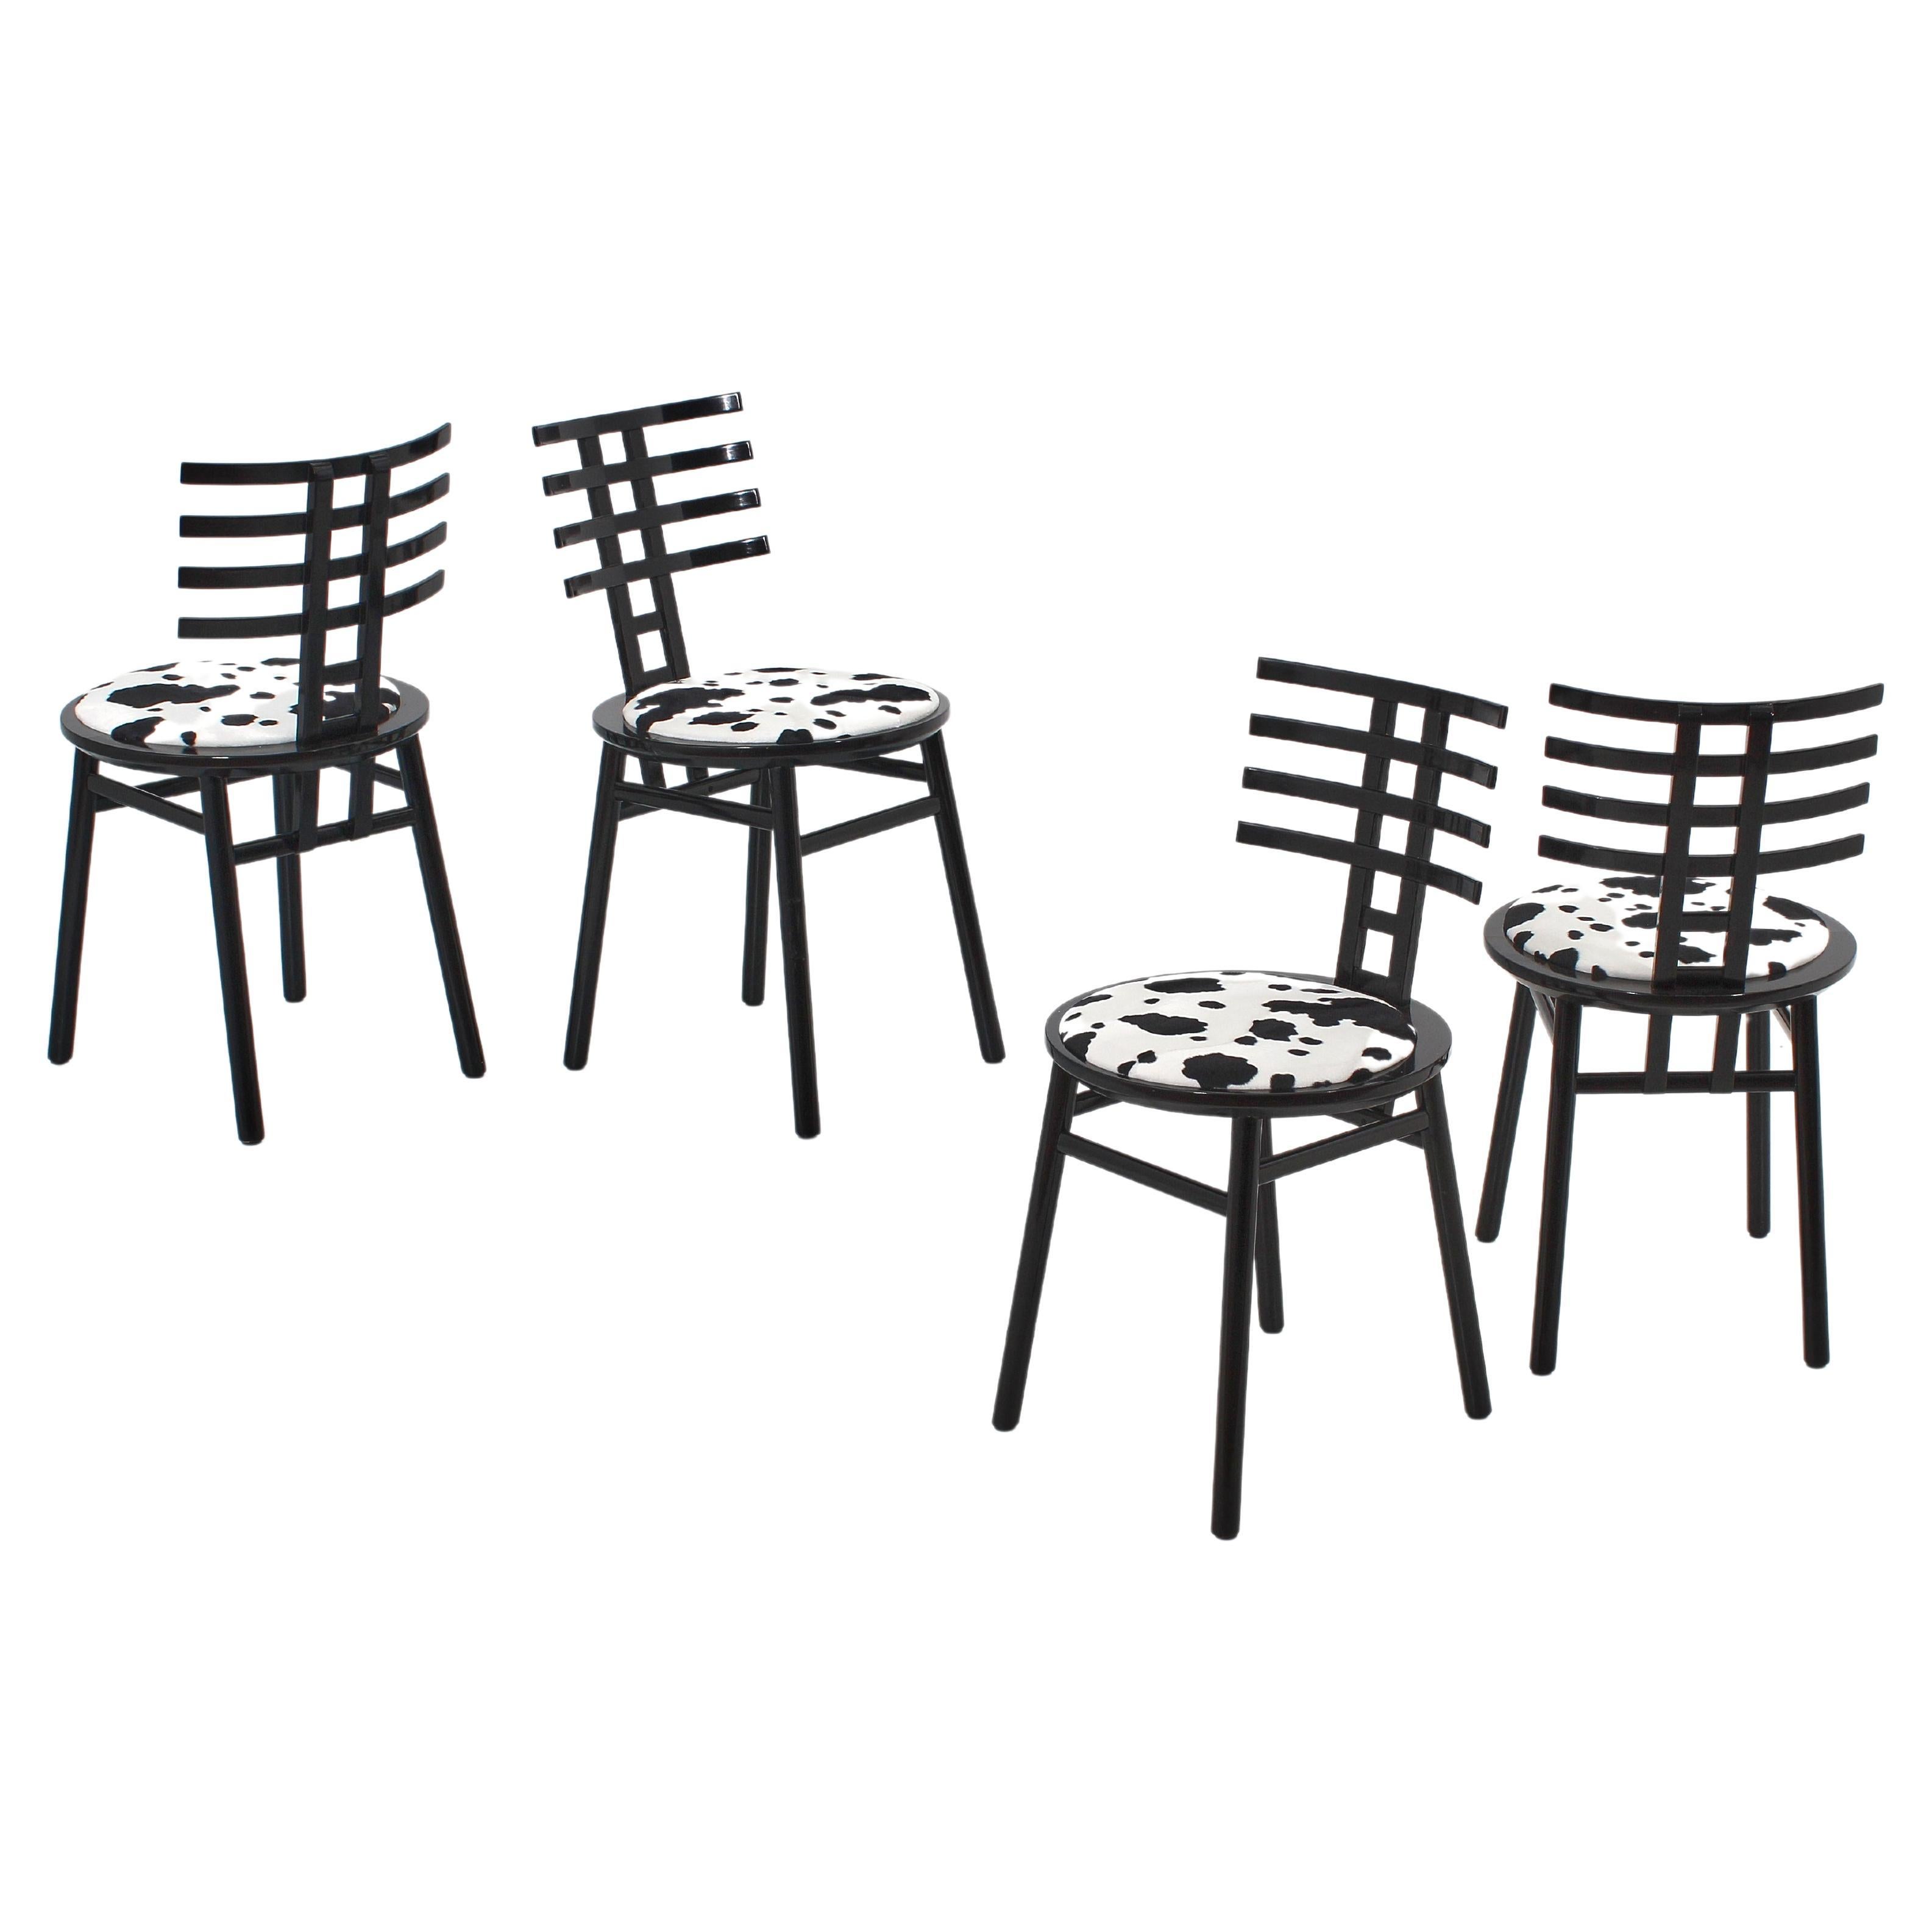 De Pas, D'urbino, Lomazzi for Sormani, Set of 4 "Sari" Chairs, Italy, 1980s  For Sale